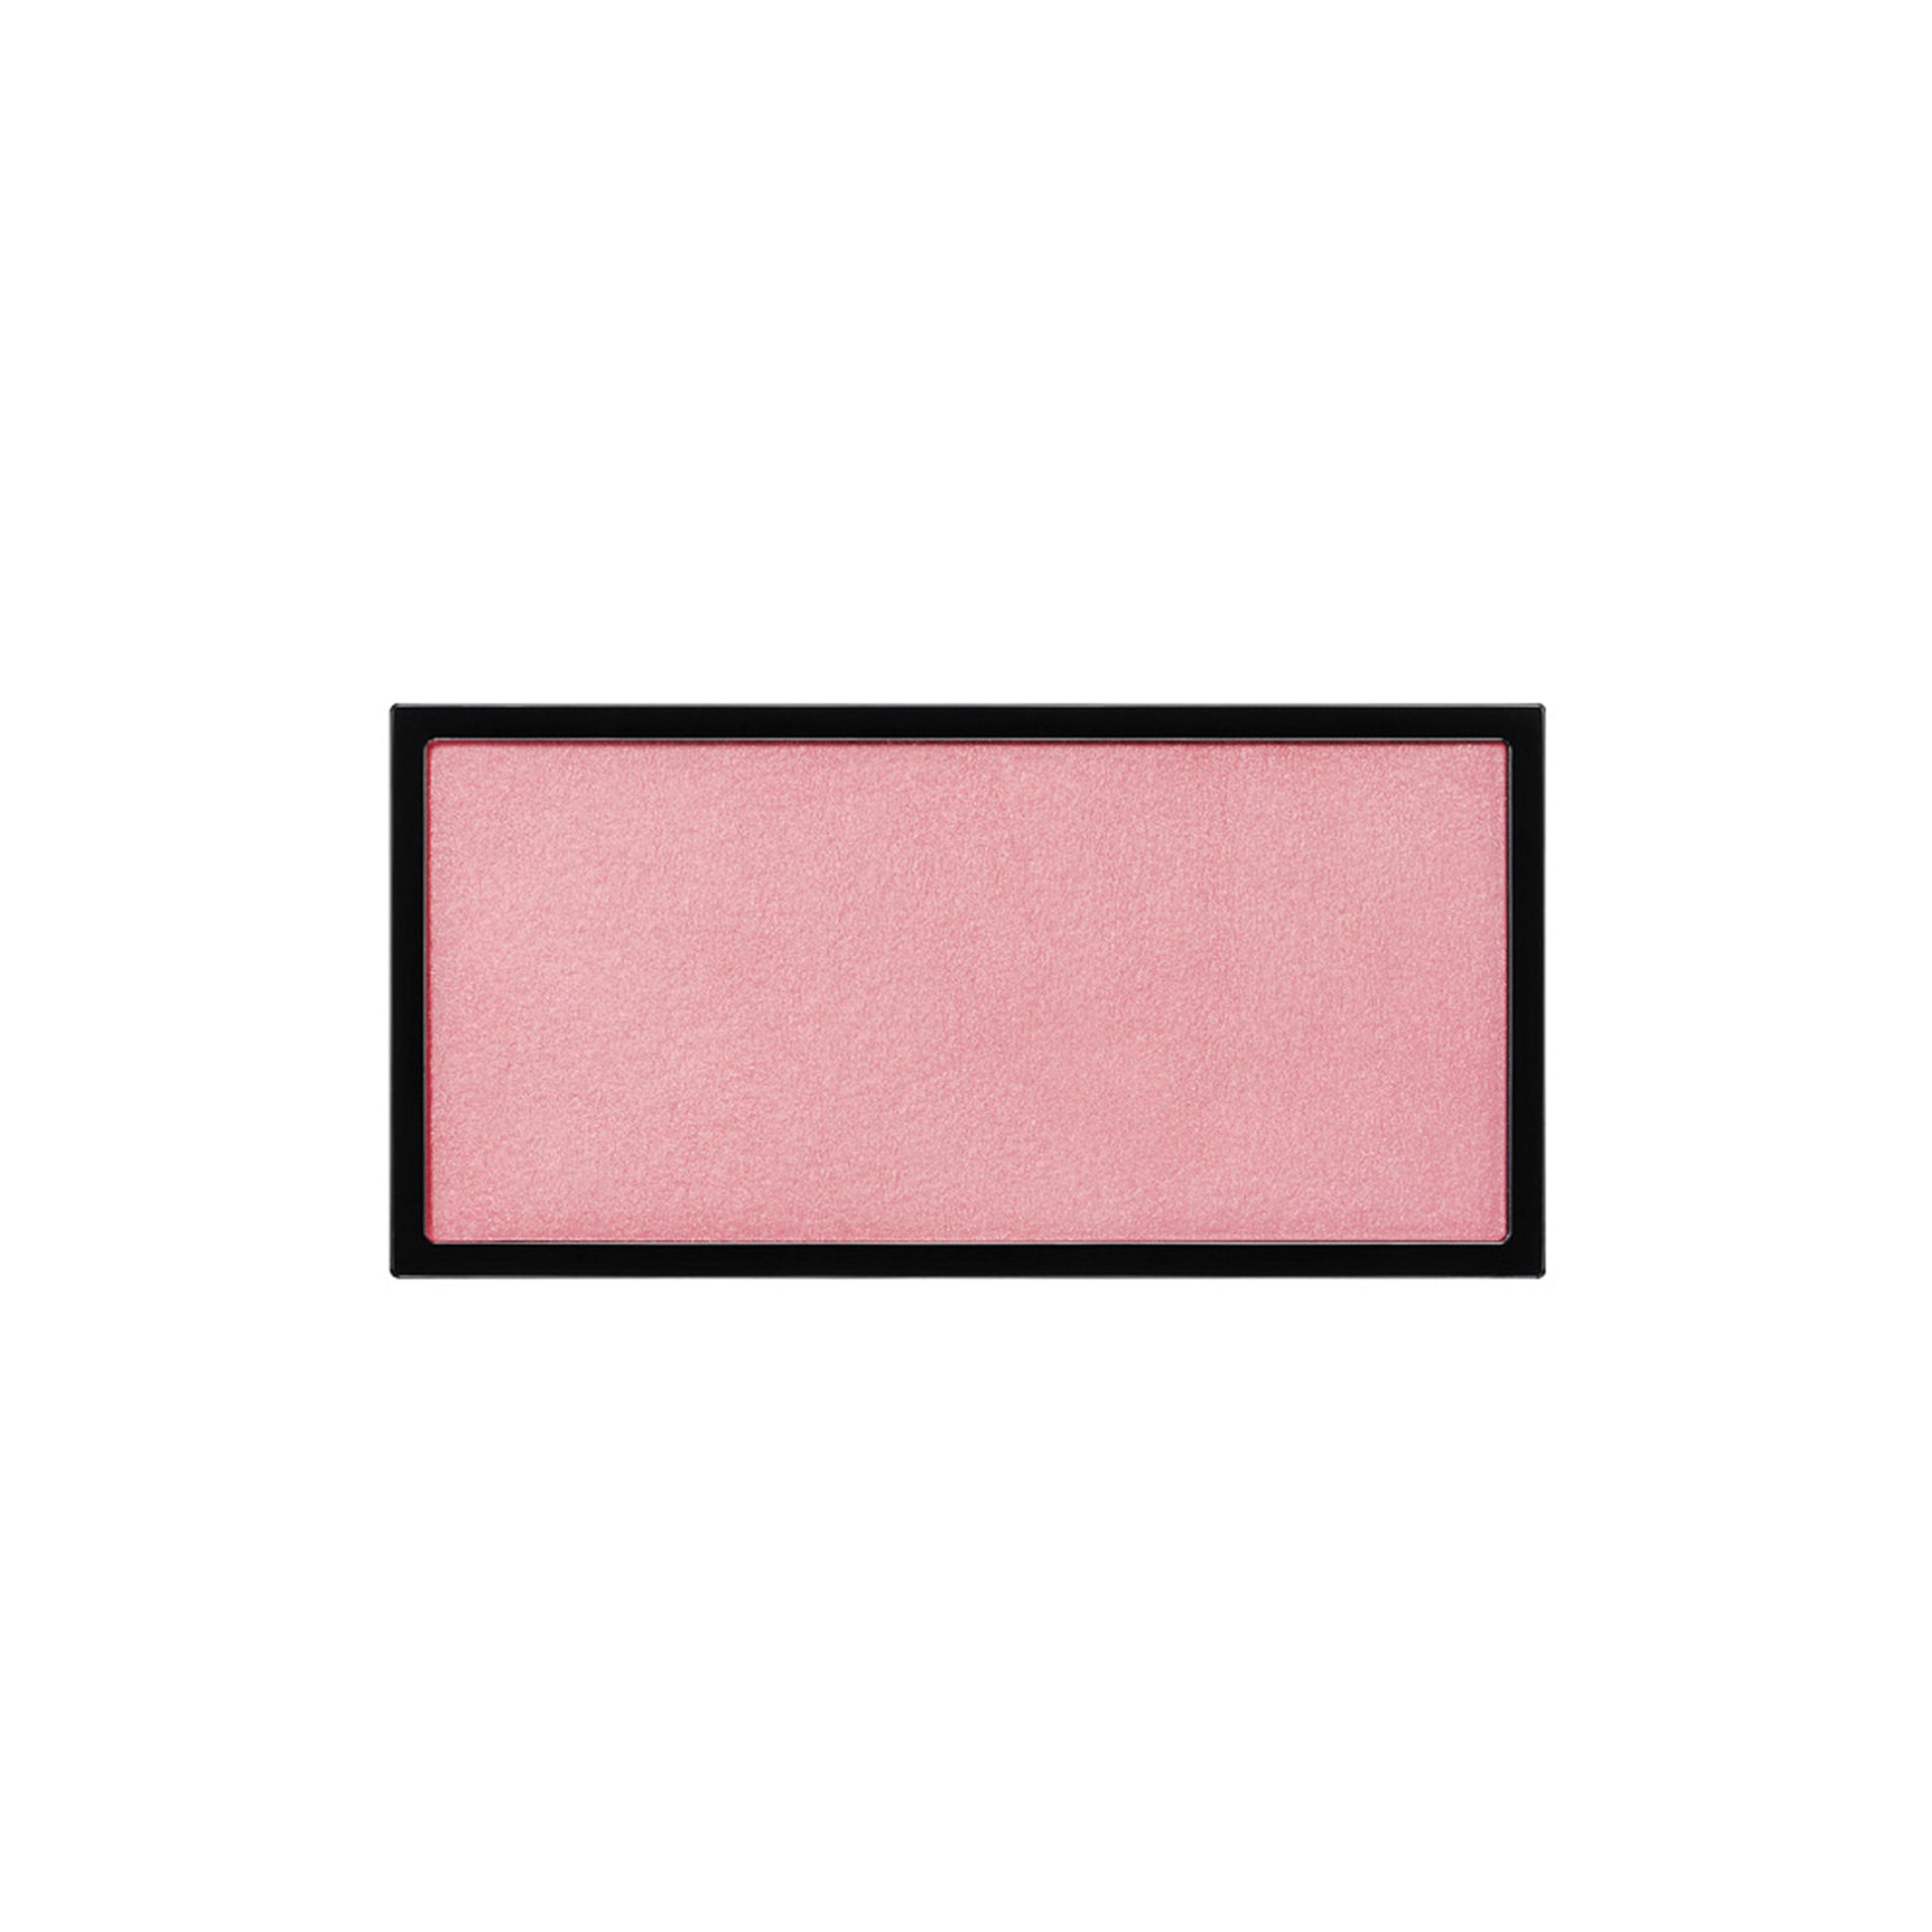 A rectangle shaped powder blush pan in a pale rose tone